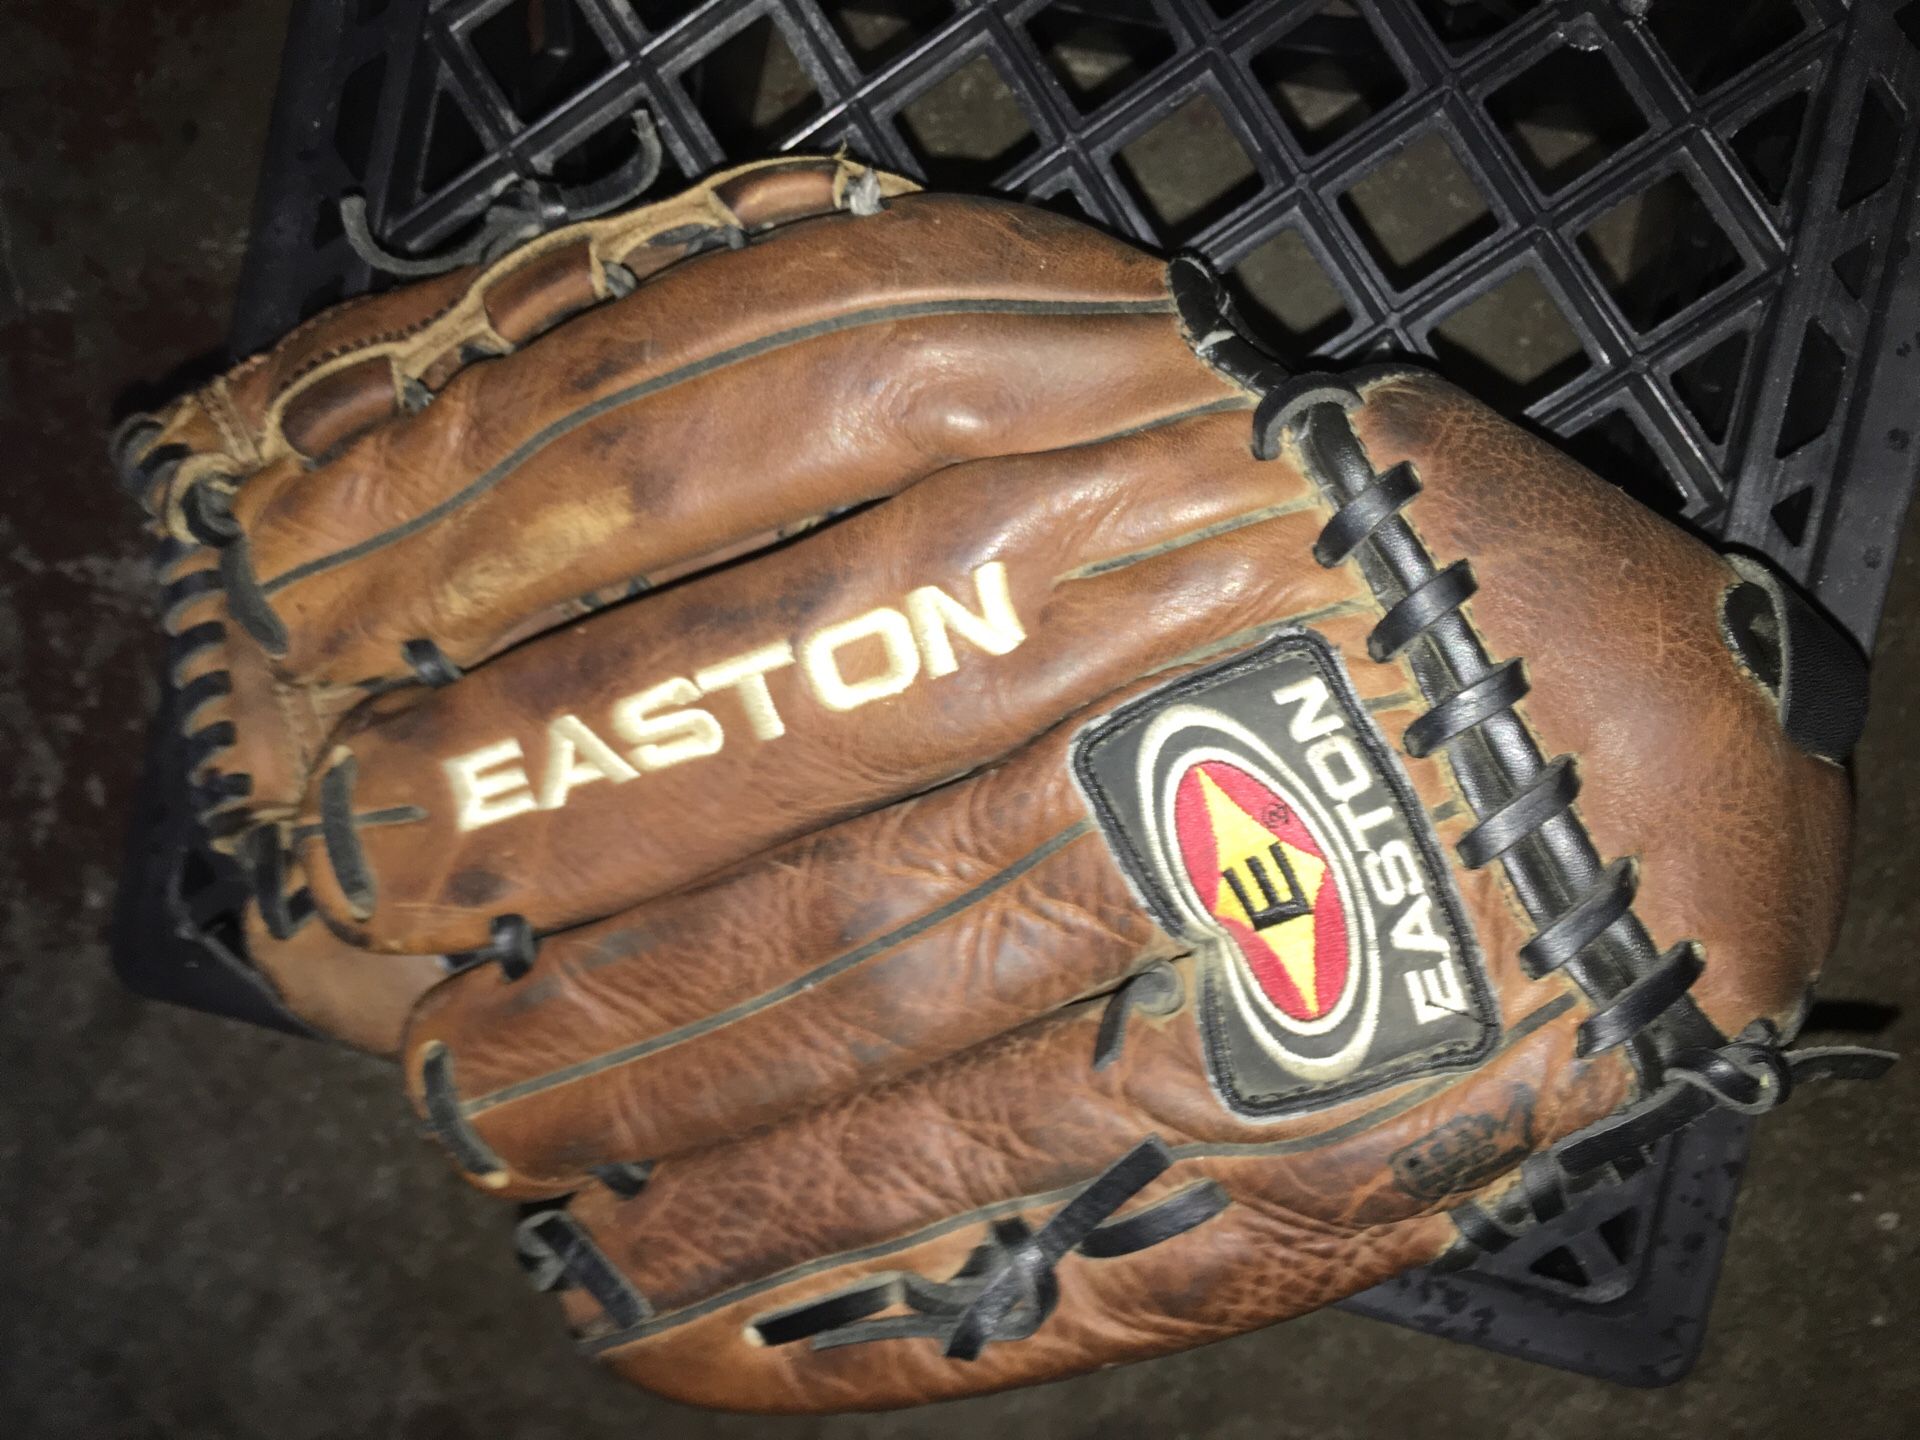 LH Baseball Easton Glove